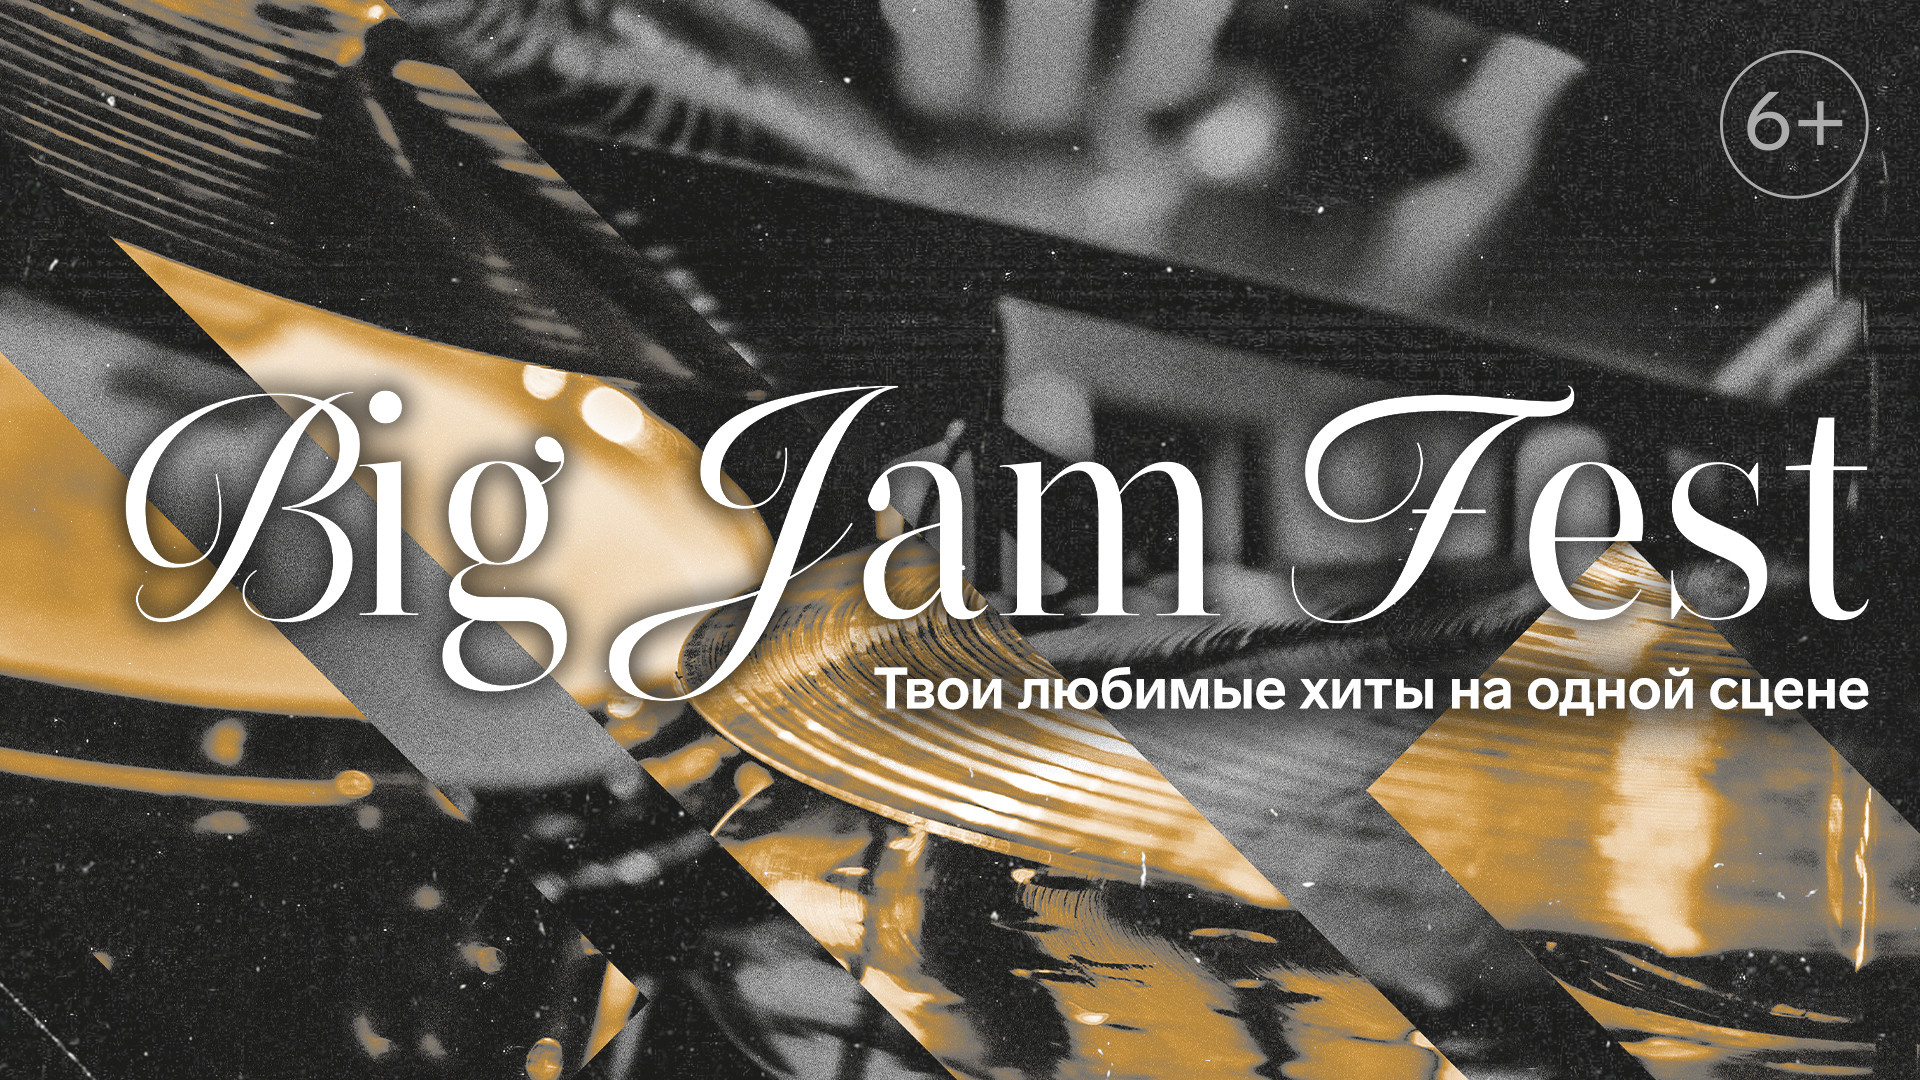 Big Jam Fest